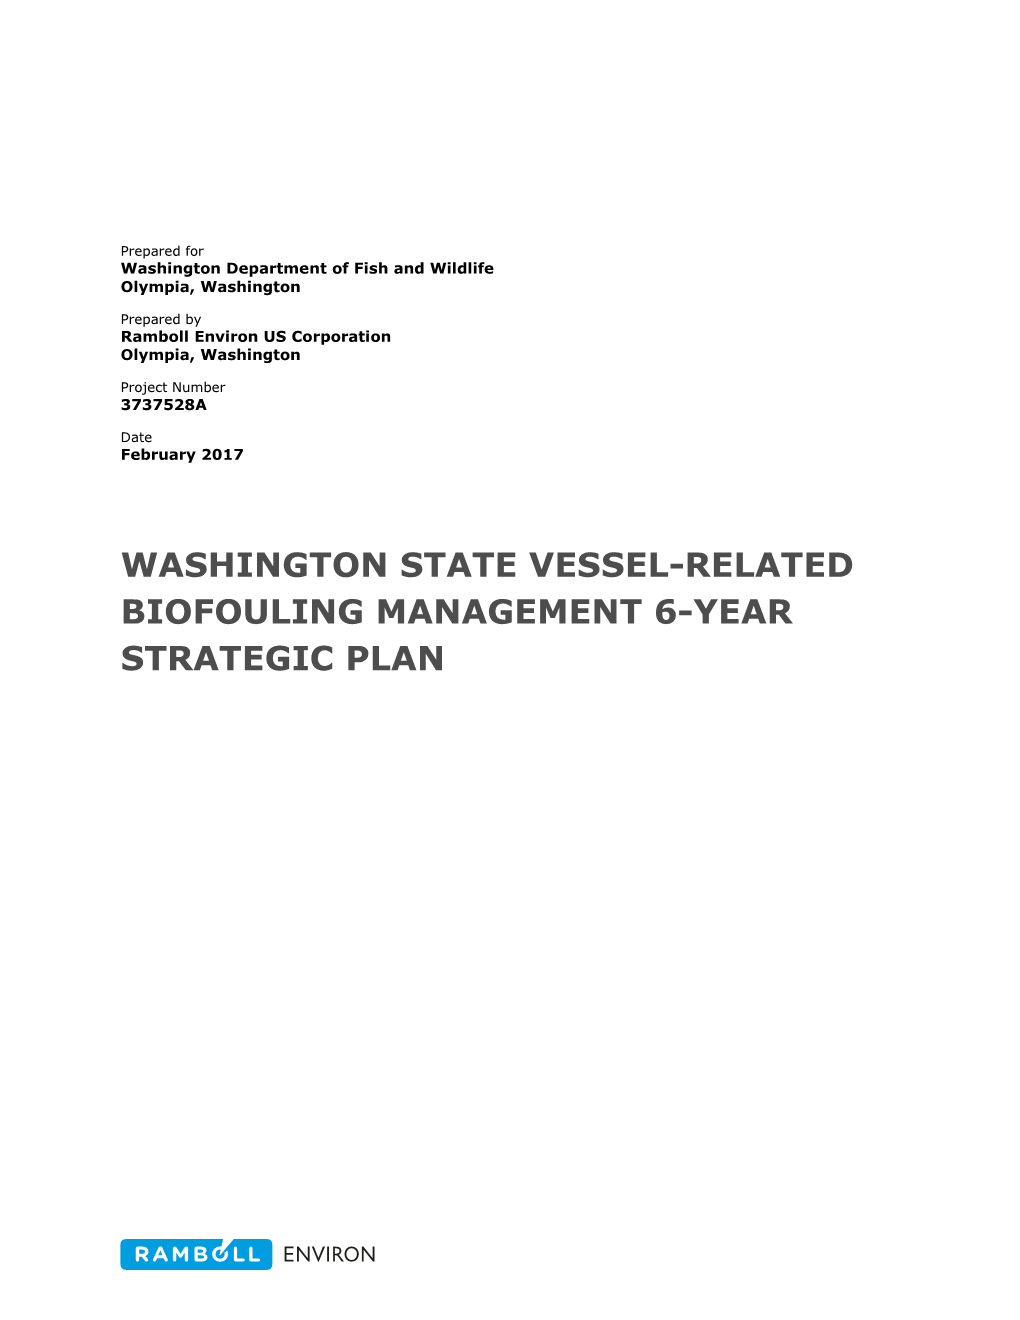 WASHINGTON STATE VESSEL-RELATED BIOFOULING MANAGEMENT 6-YEAR STRATEGIC PLAN Washington State Vessel-Related Biofouling Management 6-Year Strategic Plan